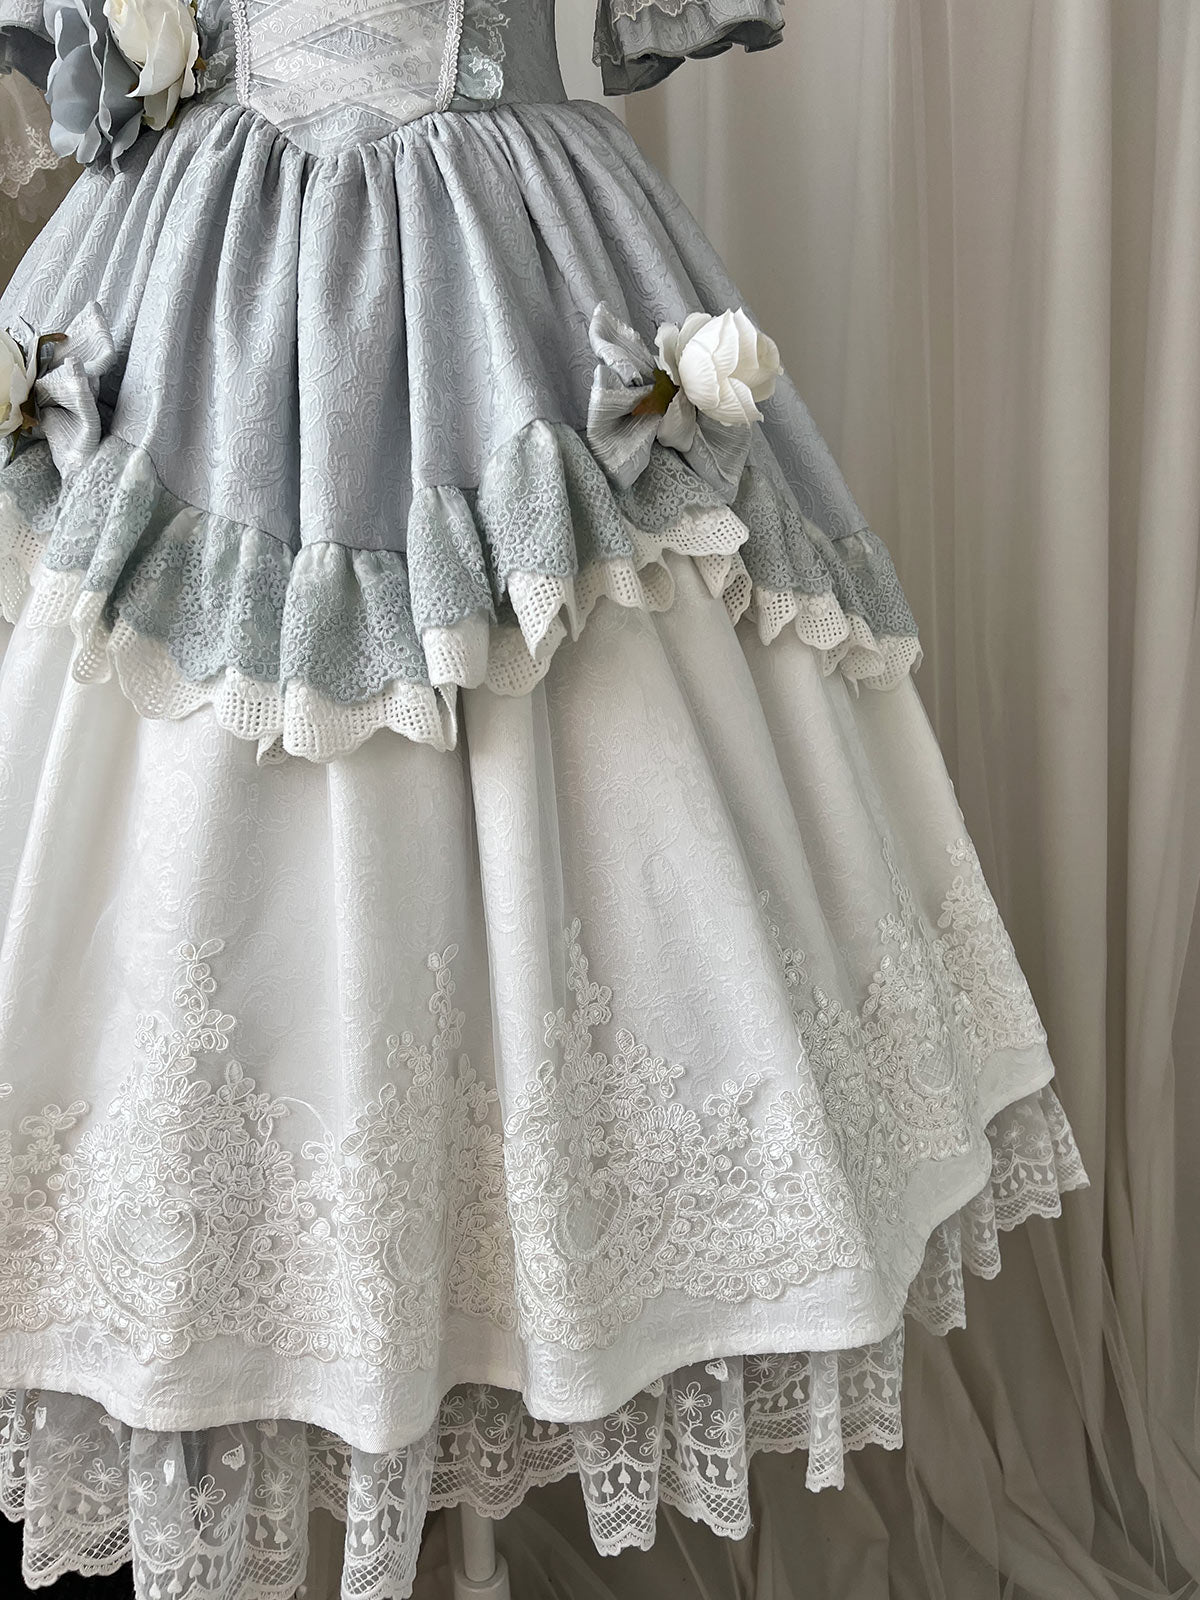 Your Princess~Fairy Dance~Elegant Lolita Lace Retro Dress   